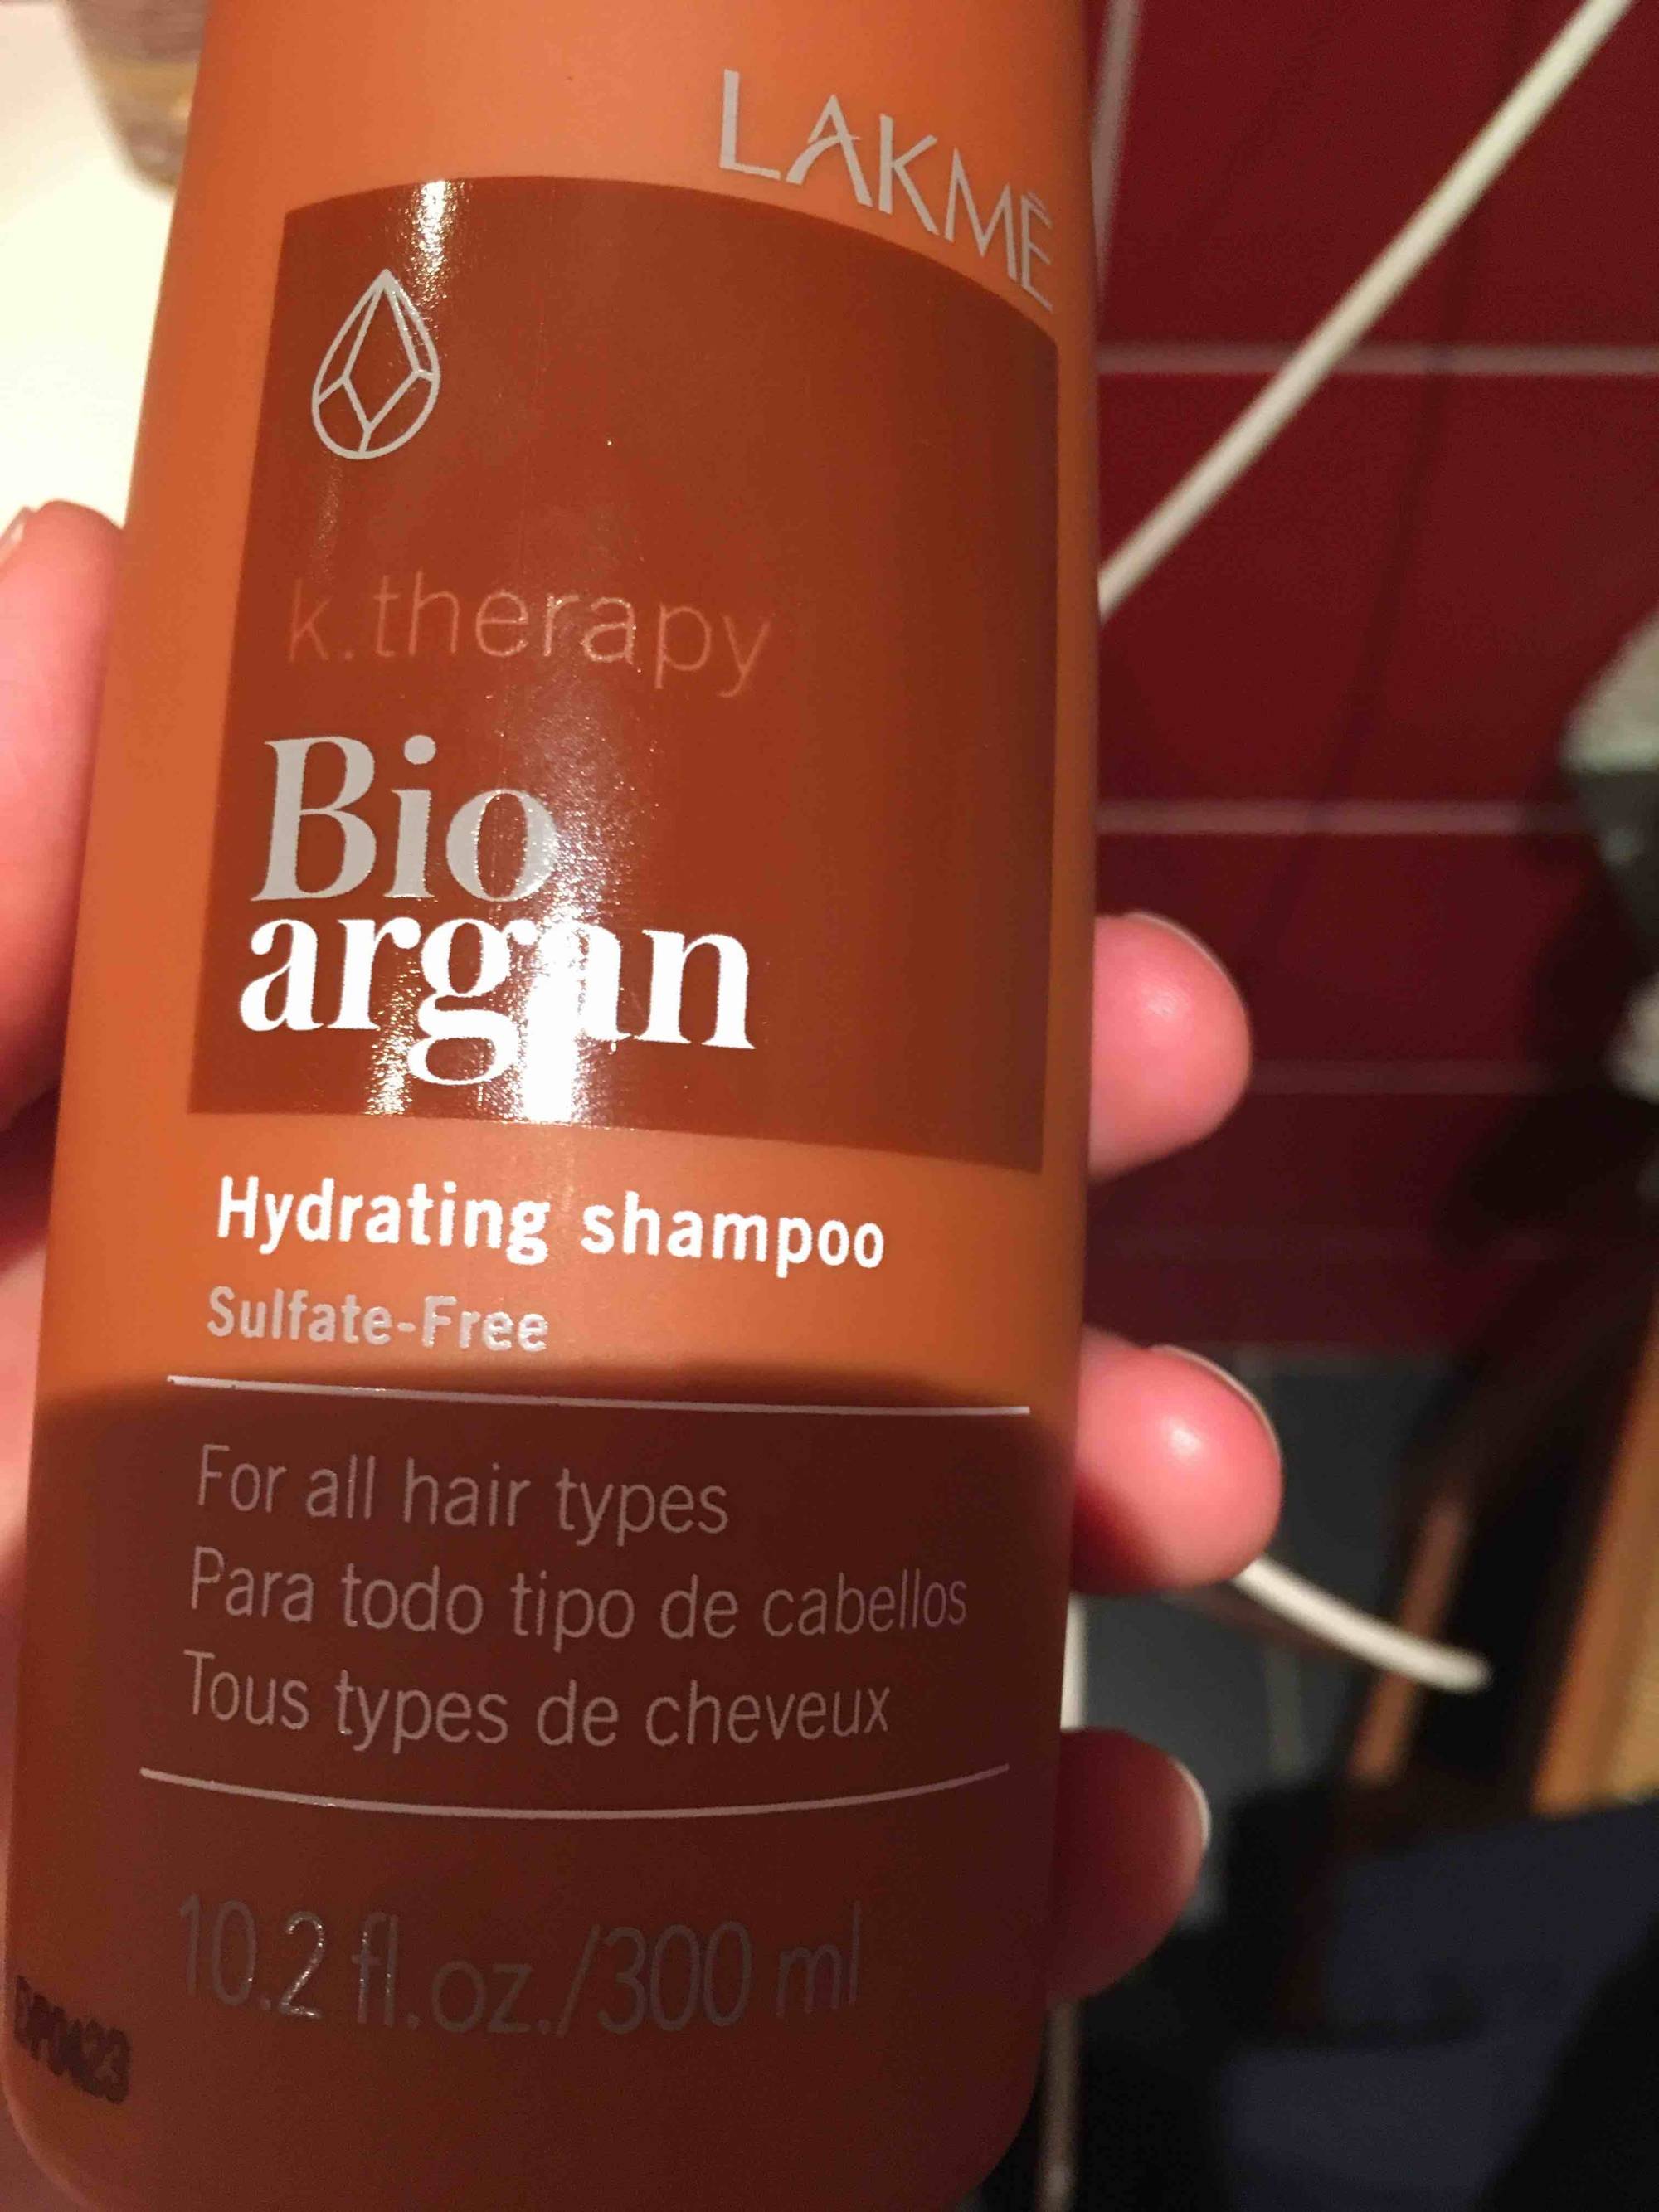 LAKME - K. therapy bio argan - Hydrating shampoo